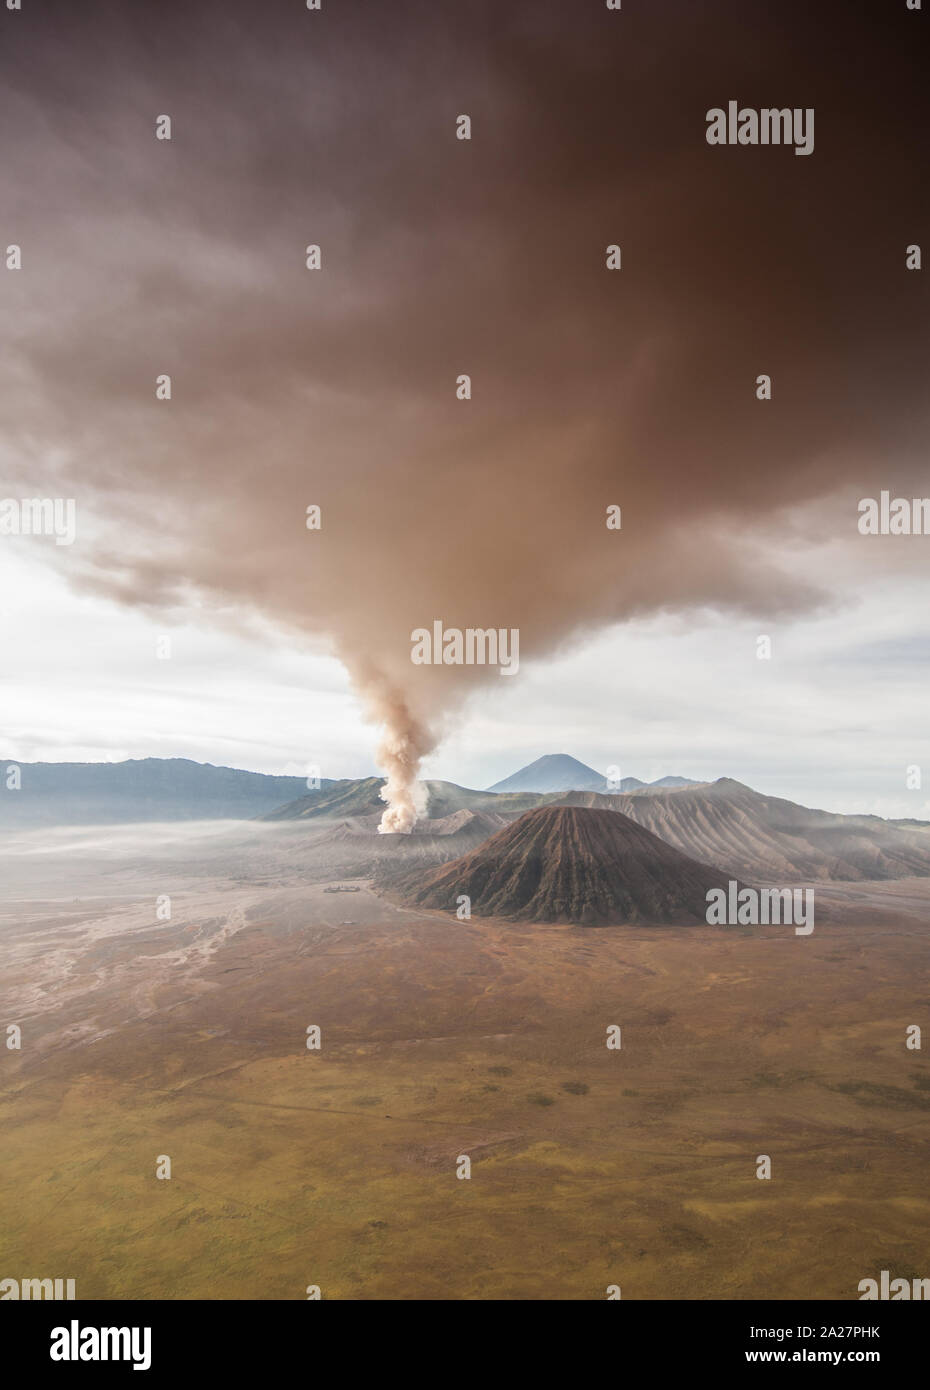 The eruption of mount Bromo darken the surrounding sky. Stock Photo